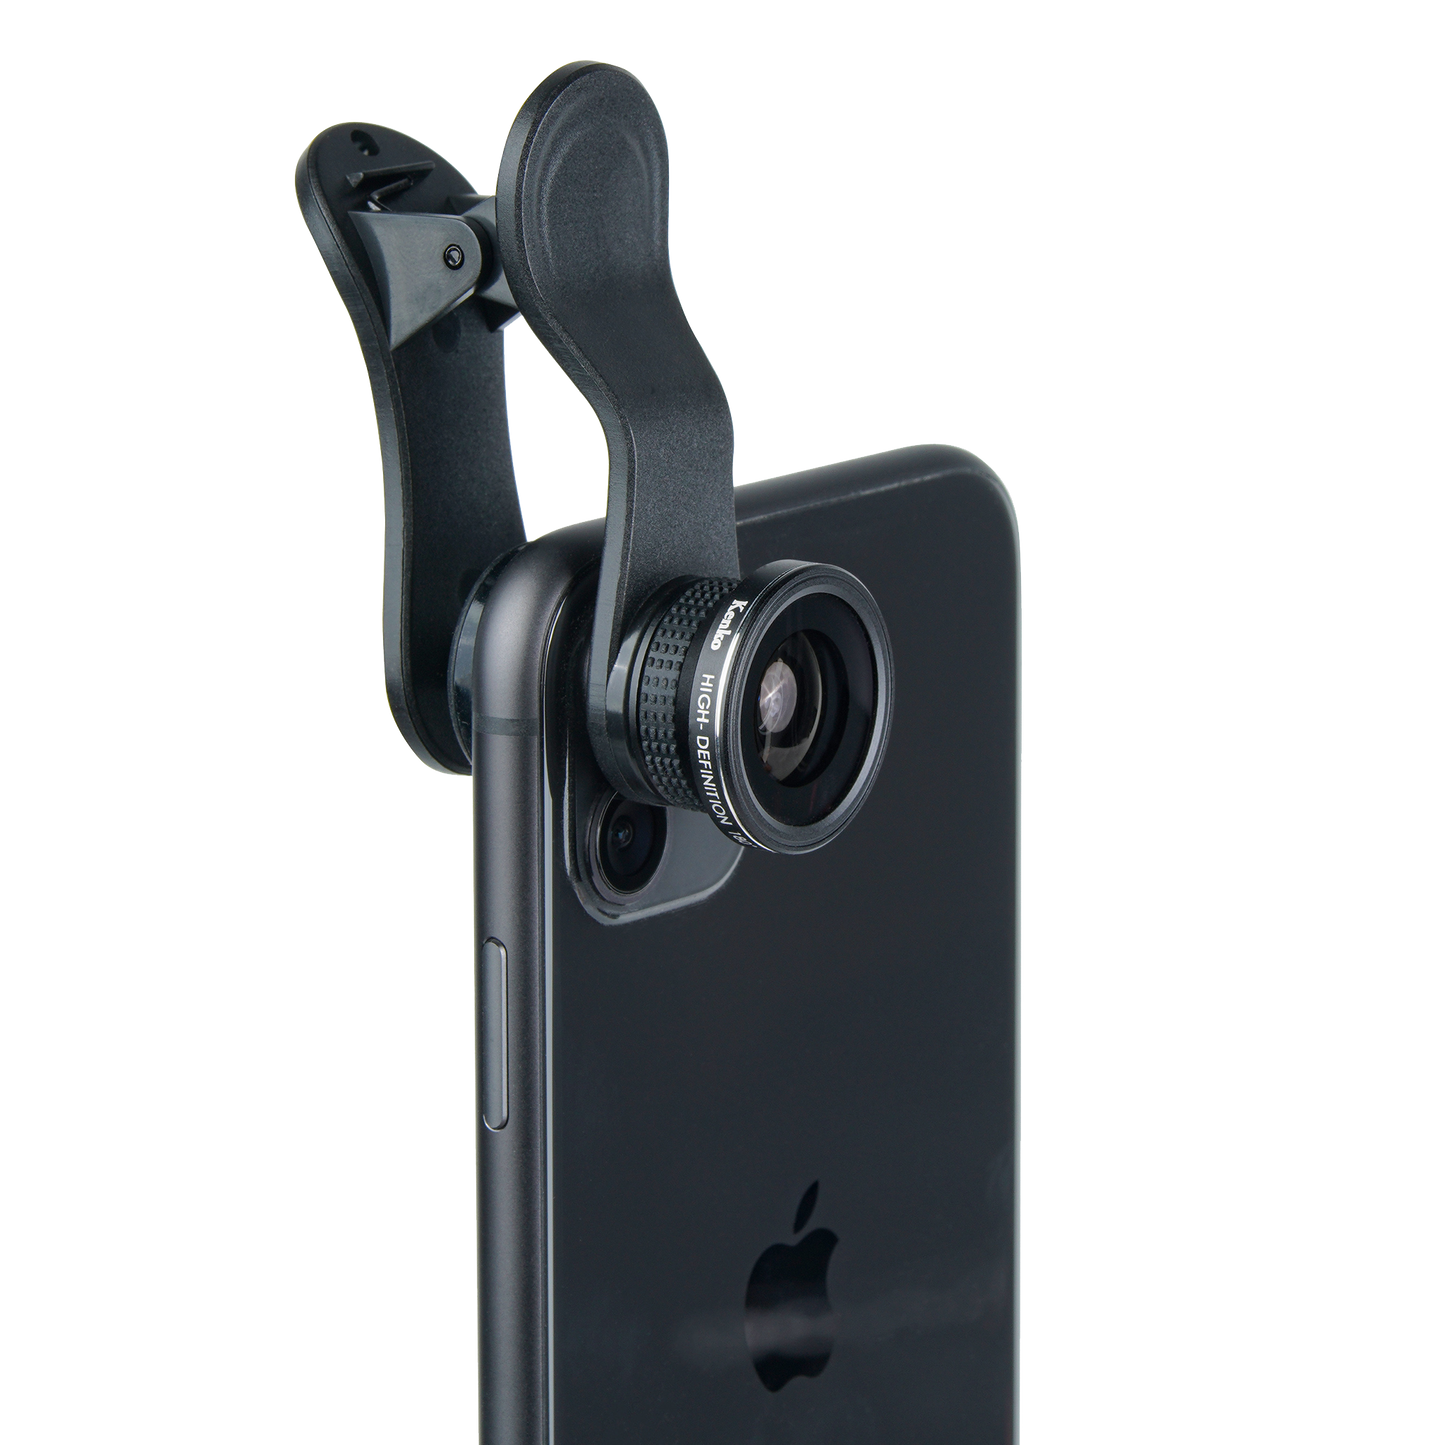 RealPro Clip Lens for Smartphone, 180°degree  Fisheye lens,